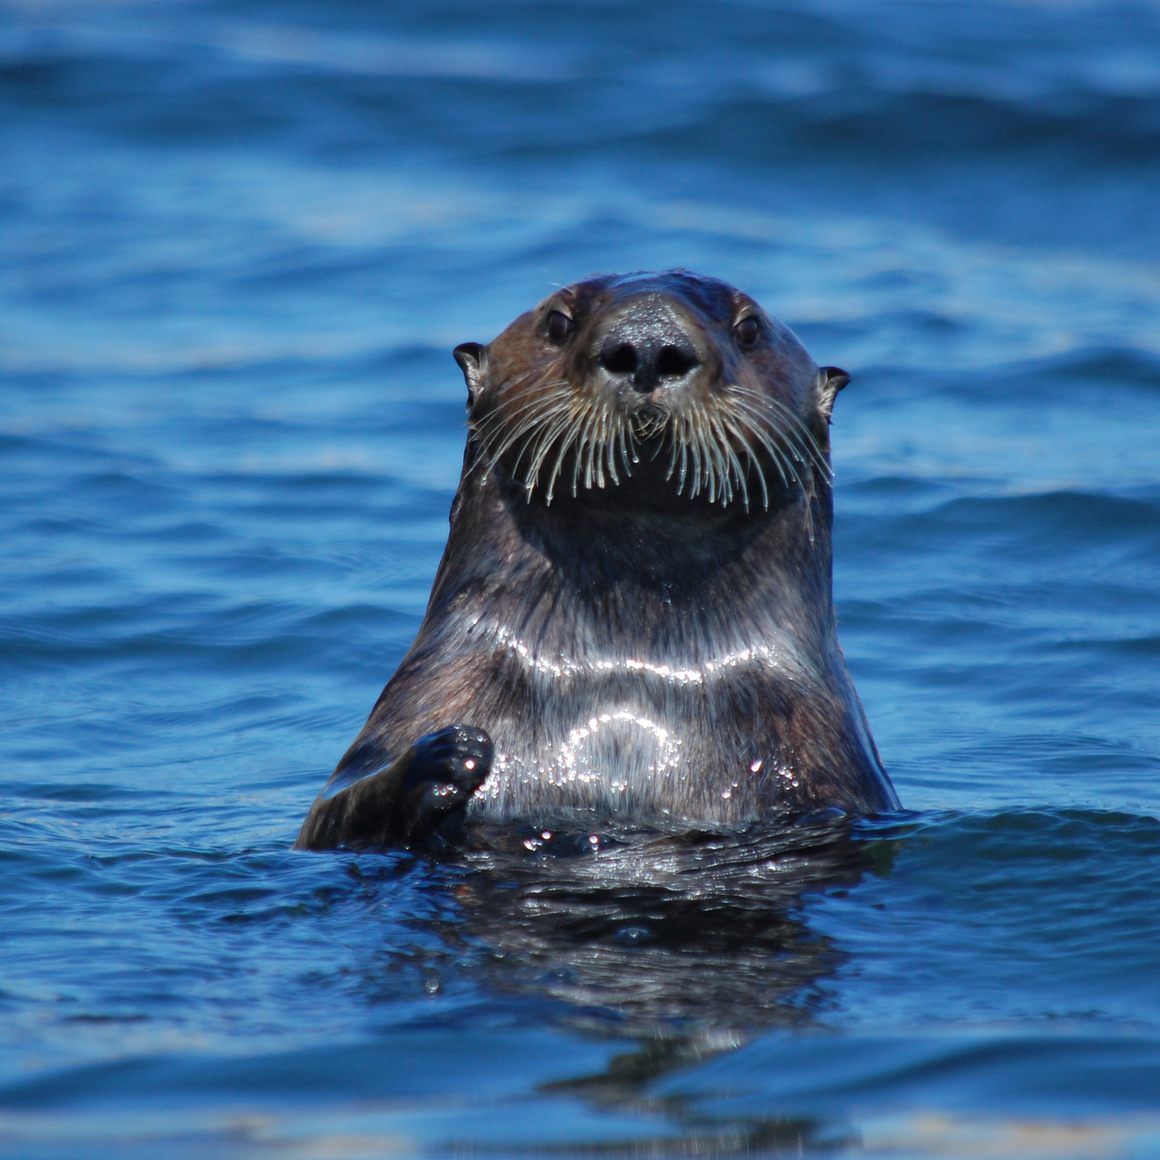 Sea otter surfacing.